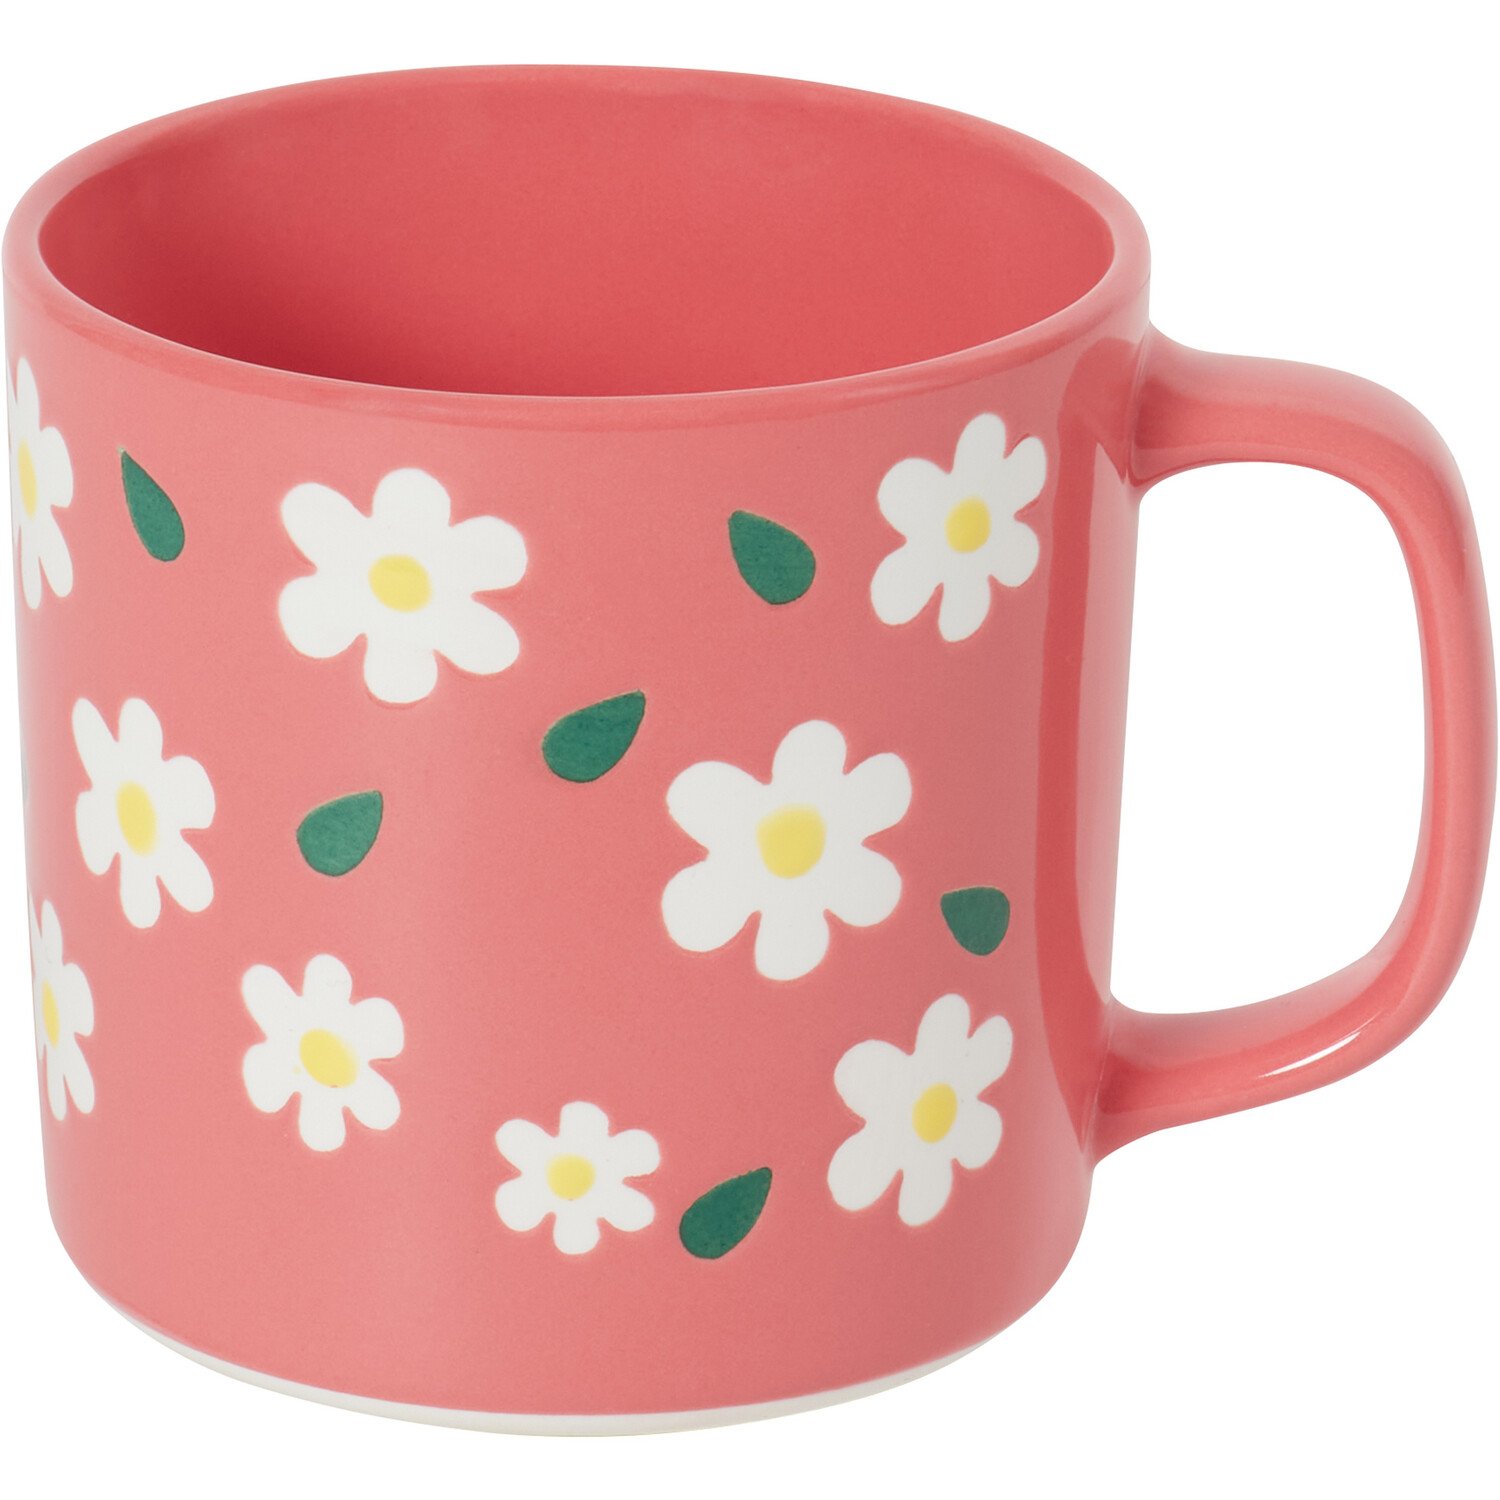 Flower Mug - Pink Image 1